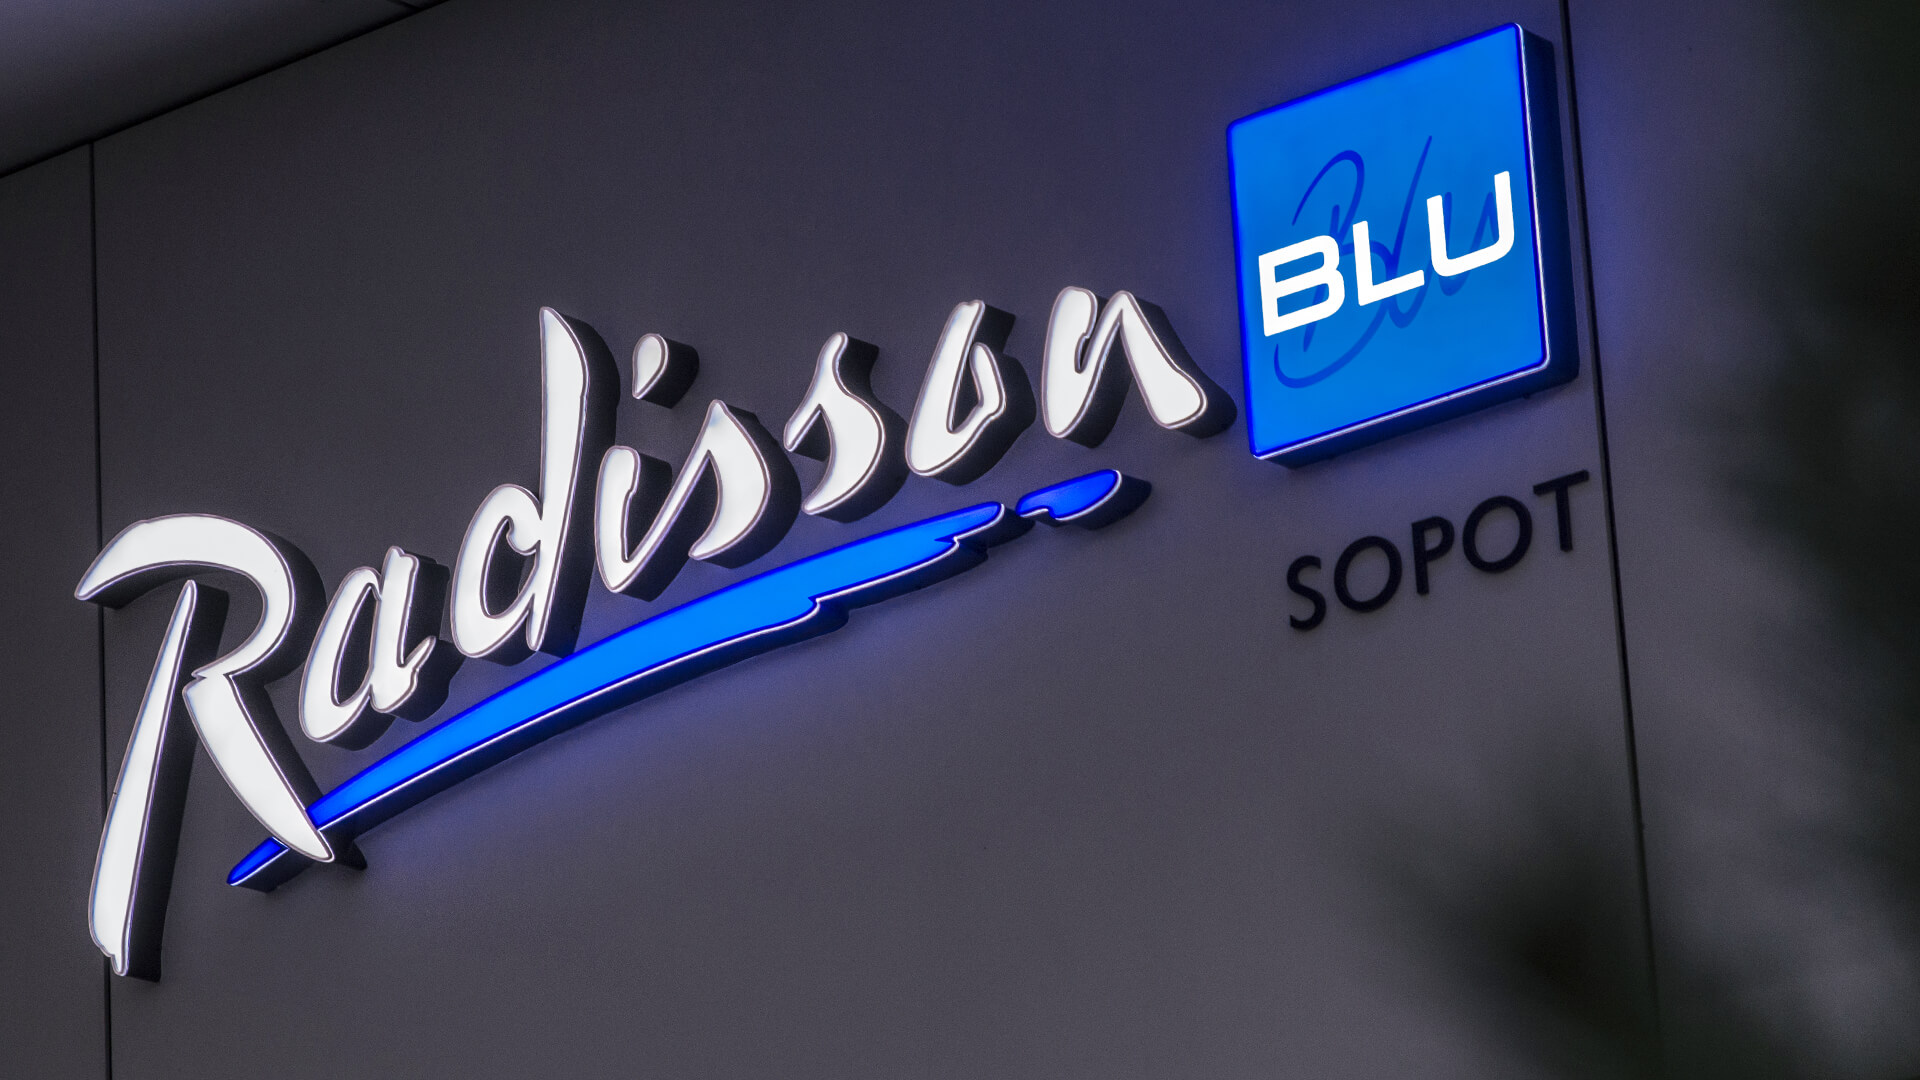 radisson-blu-logo-letters- at the entrance - radisson-blu-logo lettering at entrance-radison lettering-black-&-white